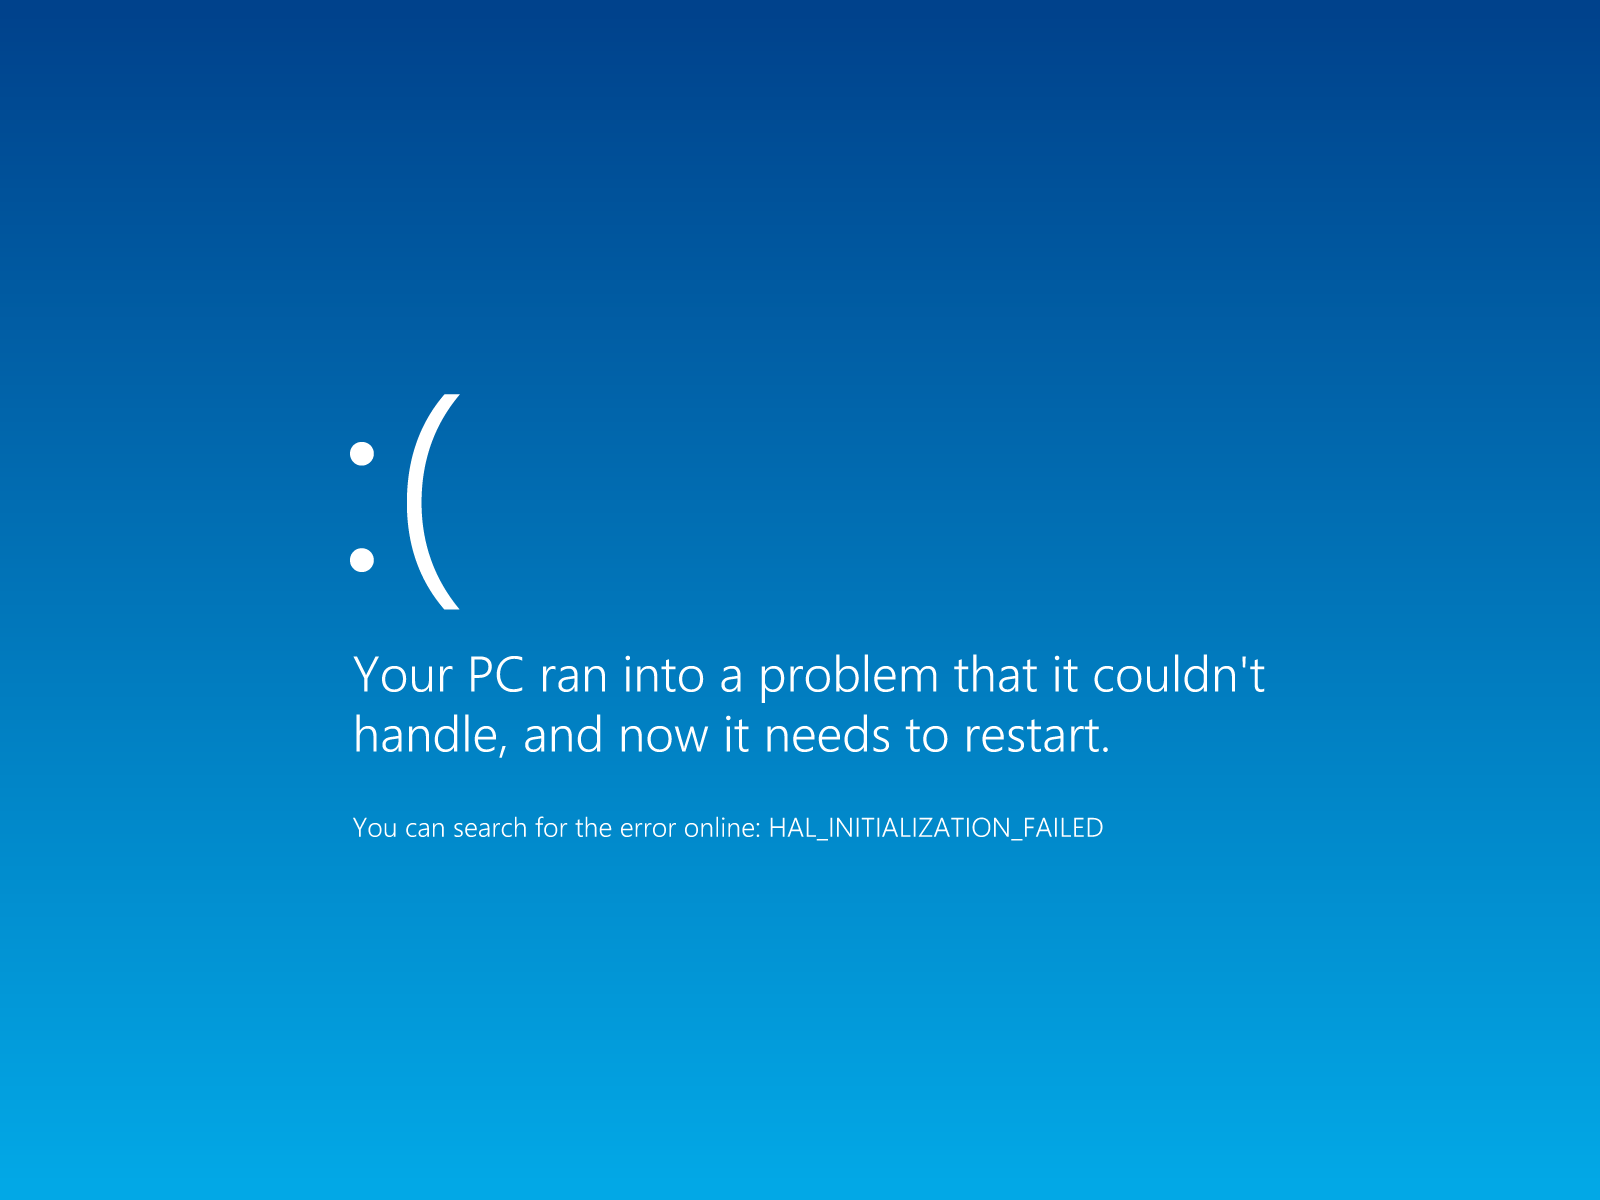 whatsapp windows 7 desktop keeps crashing